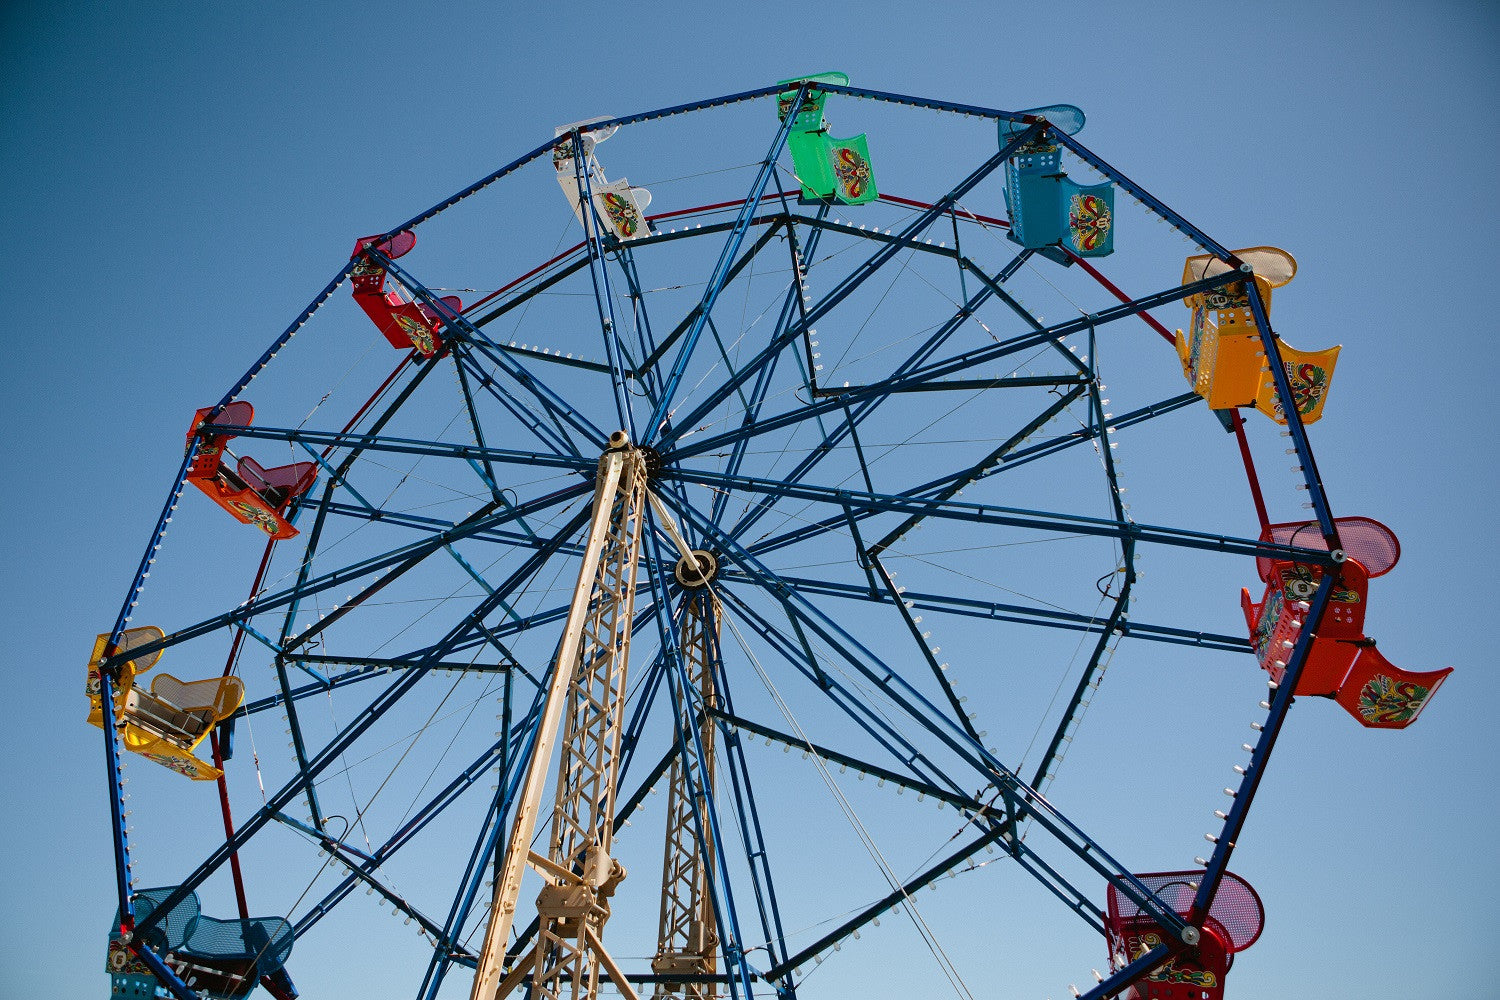 Summer Fun Zone Fun with Pickle Minnicucci!! Photos By Asami Zenri - Ferris Wheel